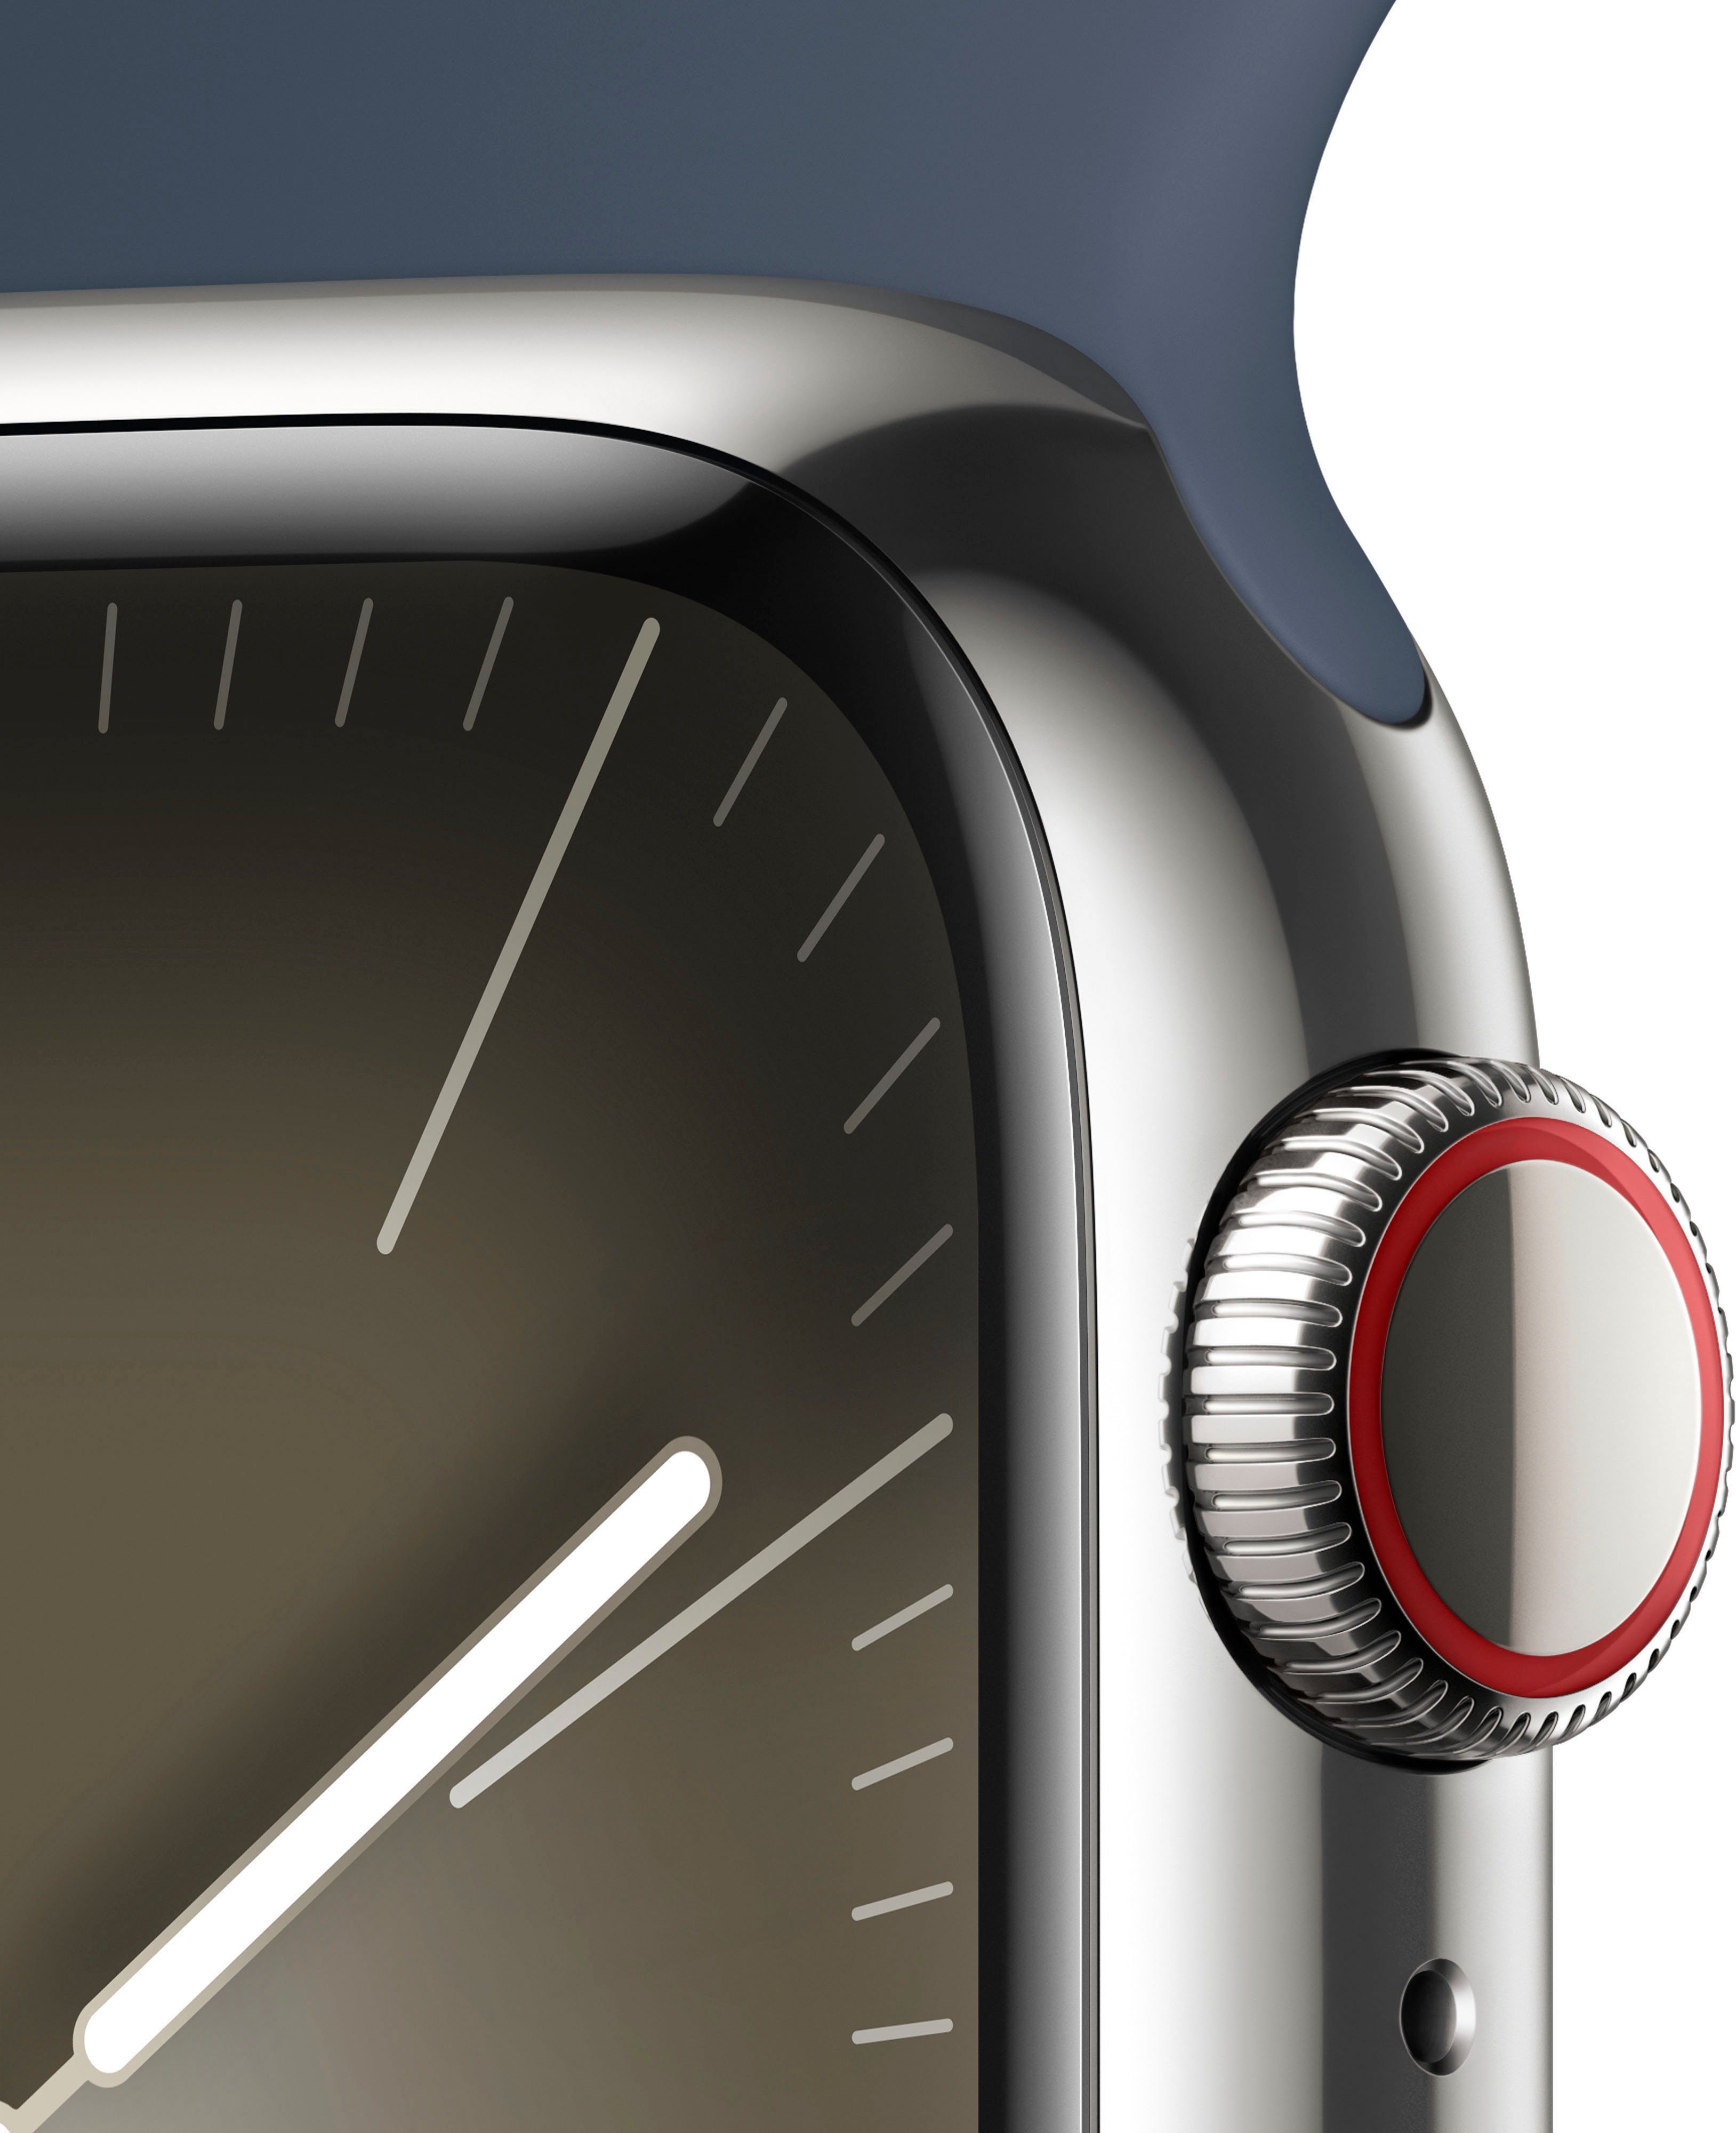 Watch Band Zoll, Silber Cellular OS Edelstahl cm/1,61 Series 9 41mm GPS Sport Apple Sturmblau | Smartwatch (4,1 10), Watch +